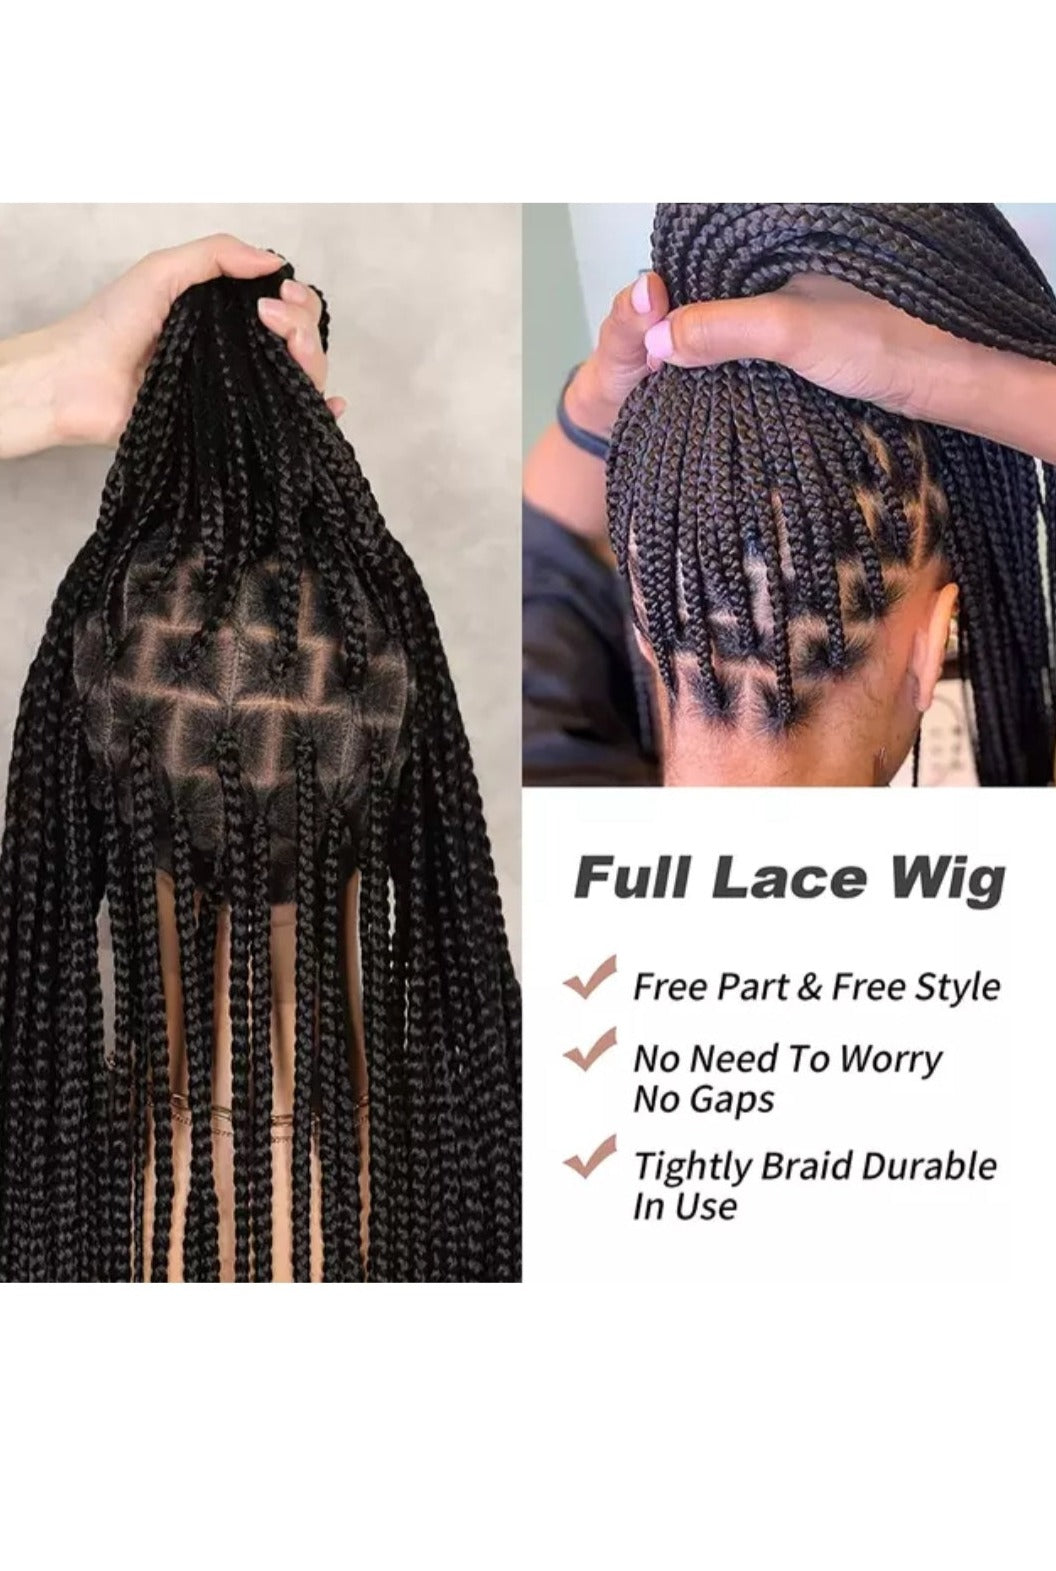 MH braided wig